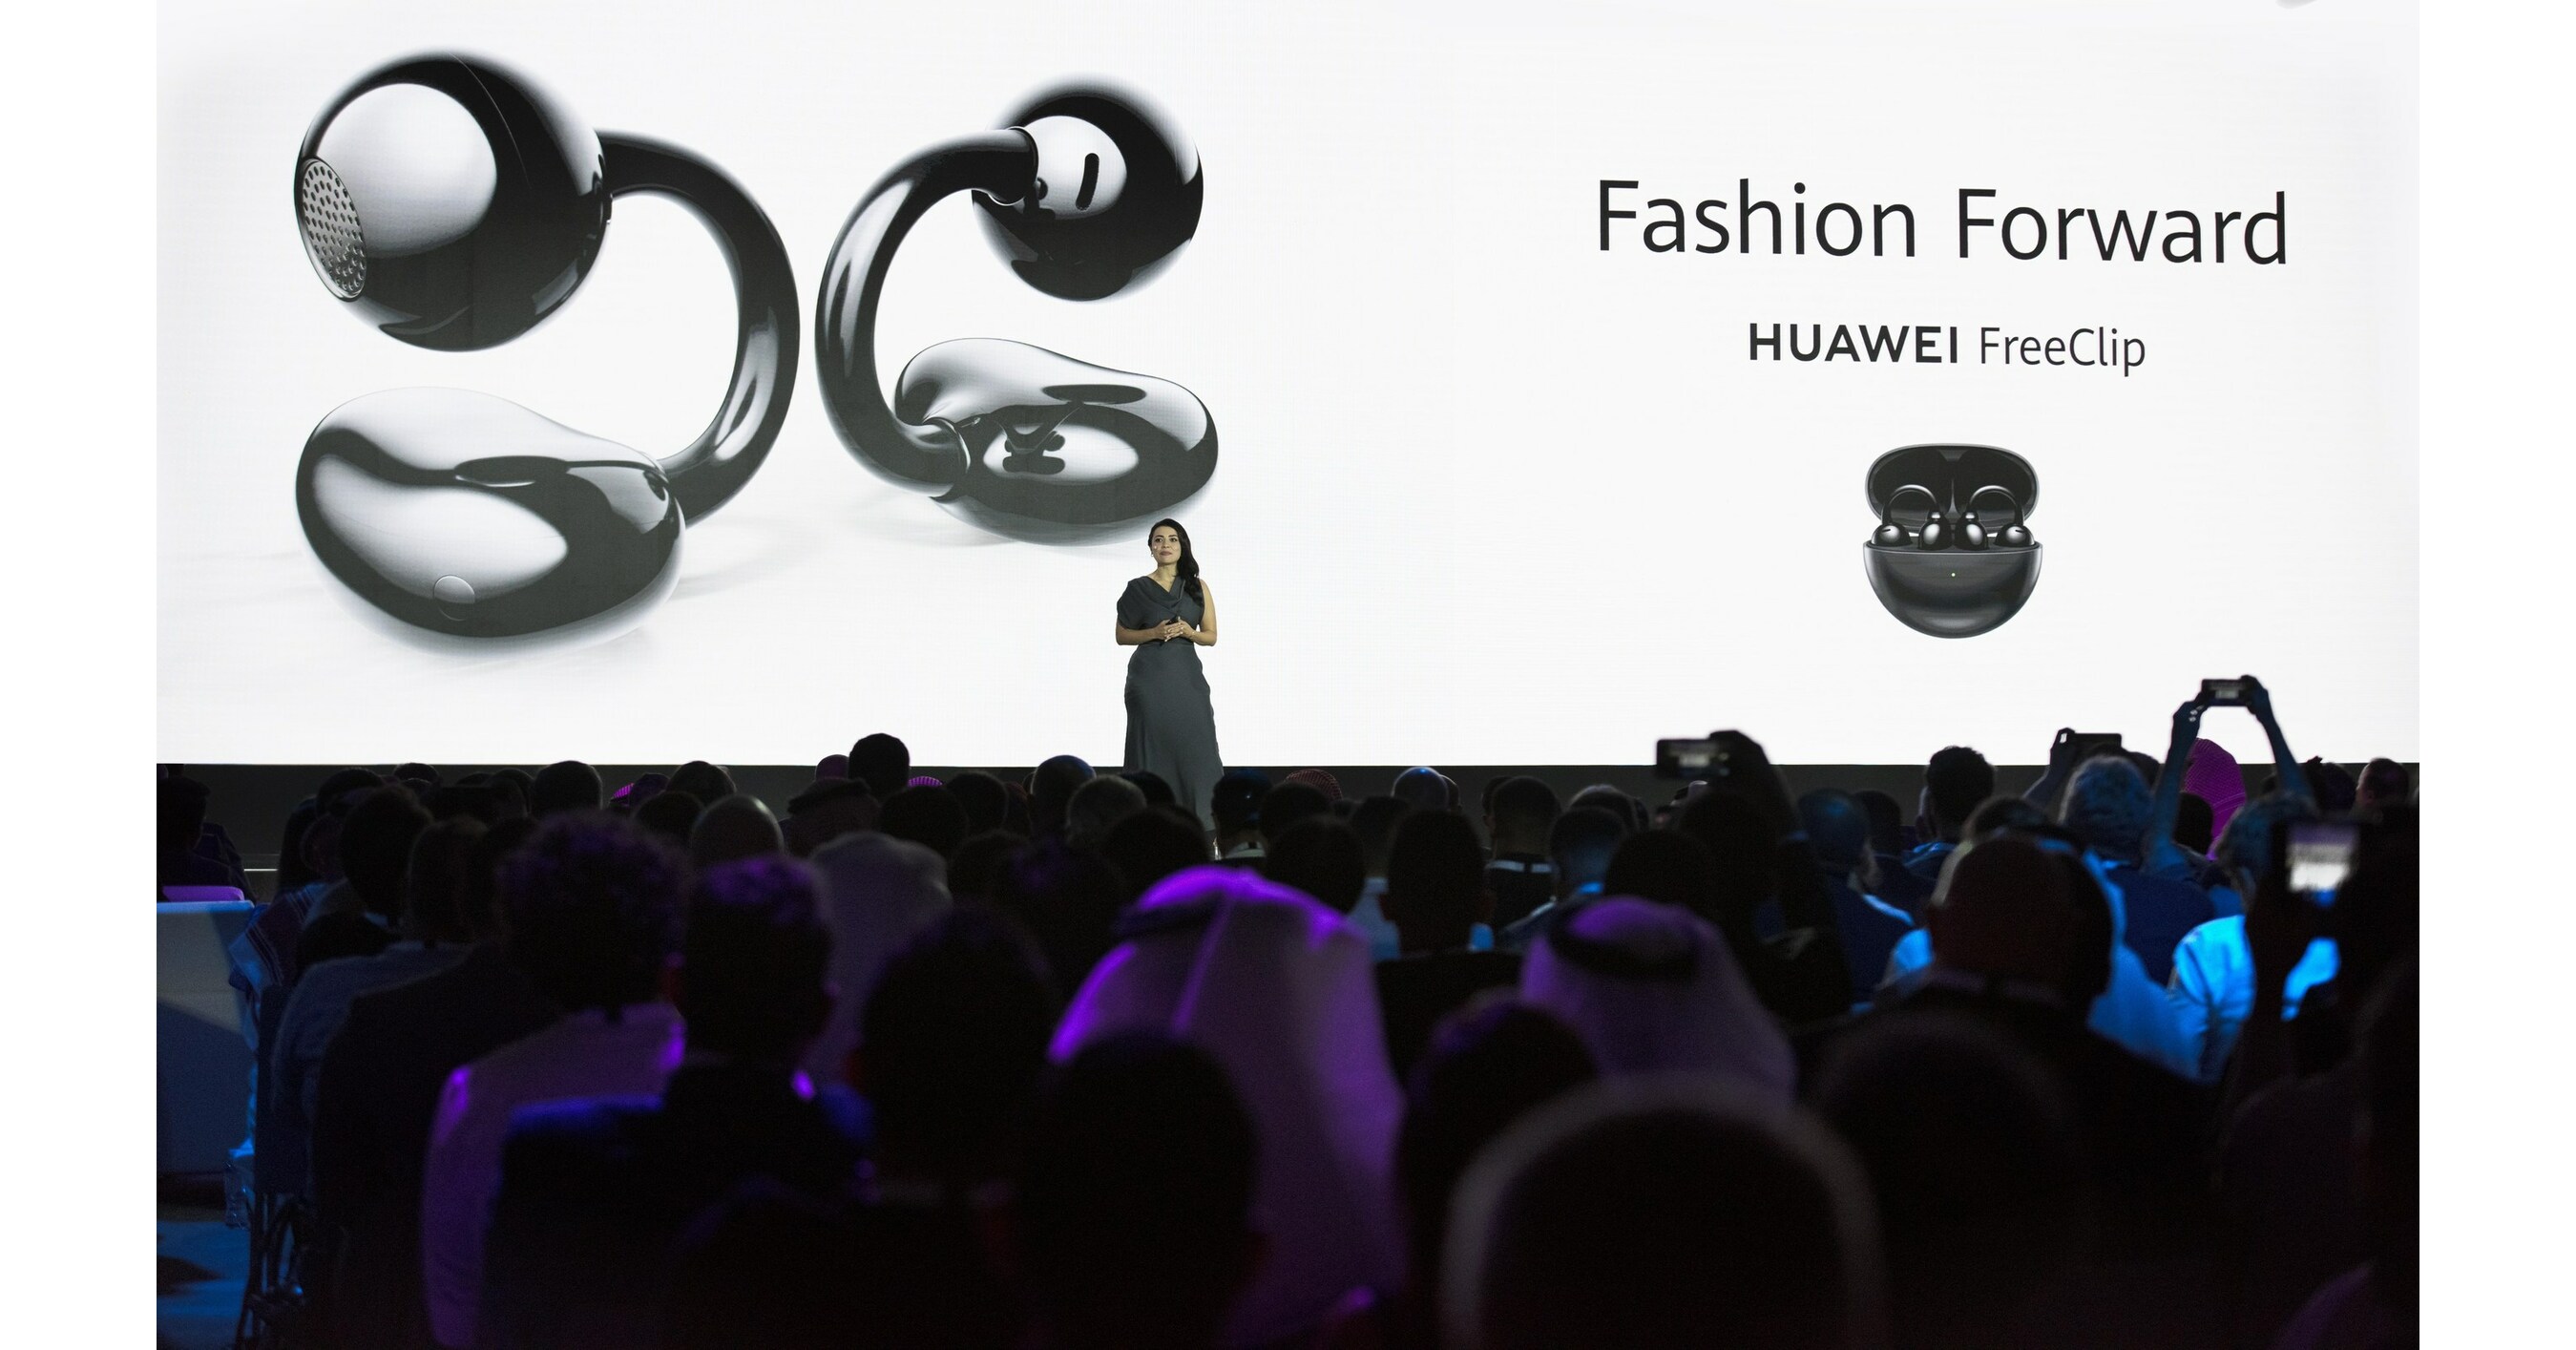 New Huawei FreeClip Open-ear earbuds and more debut in gala Dubai